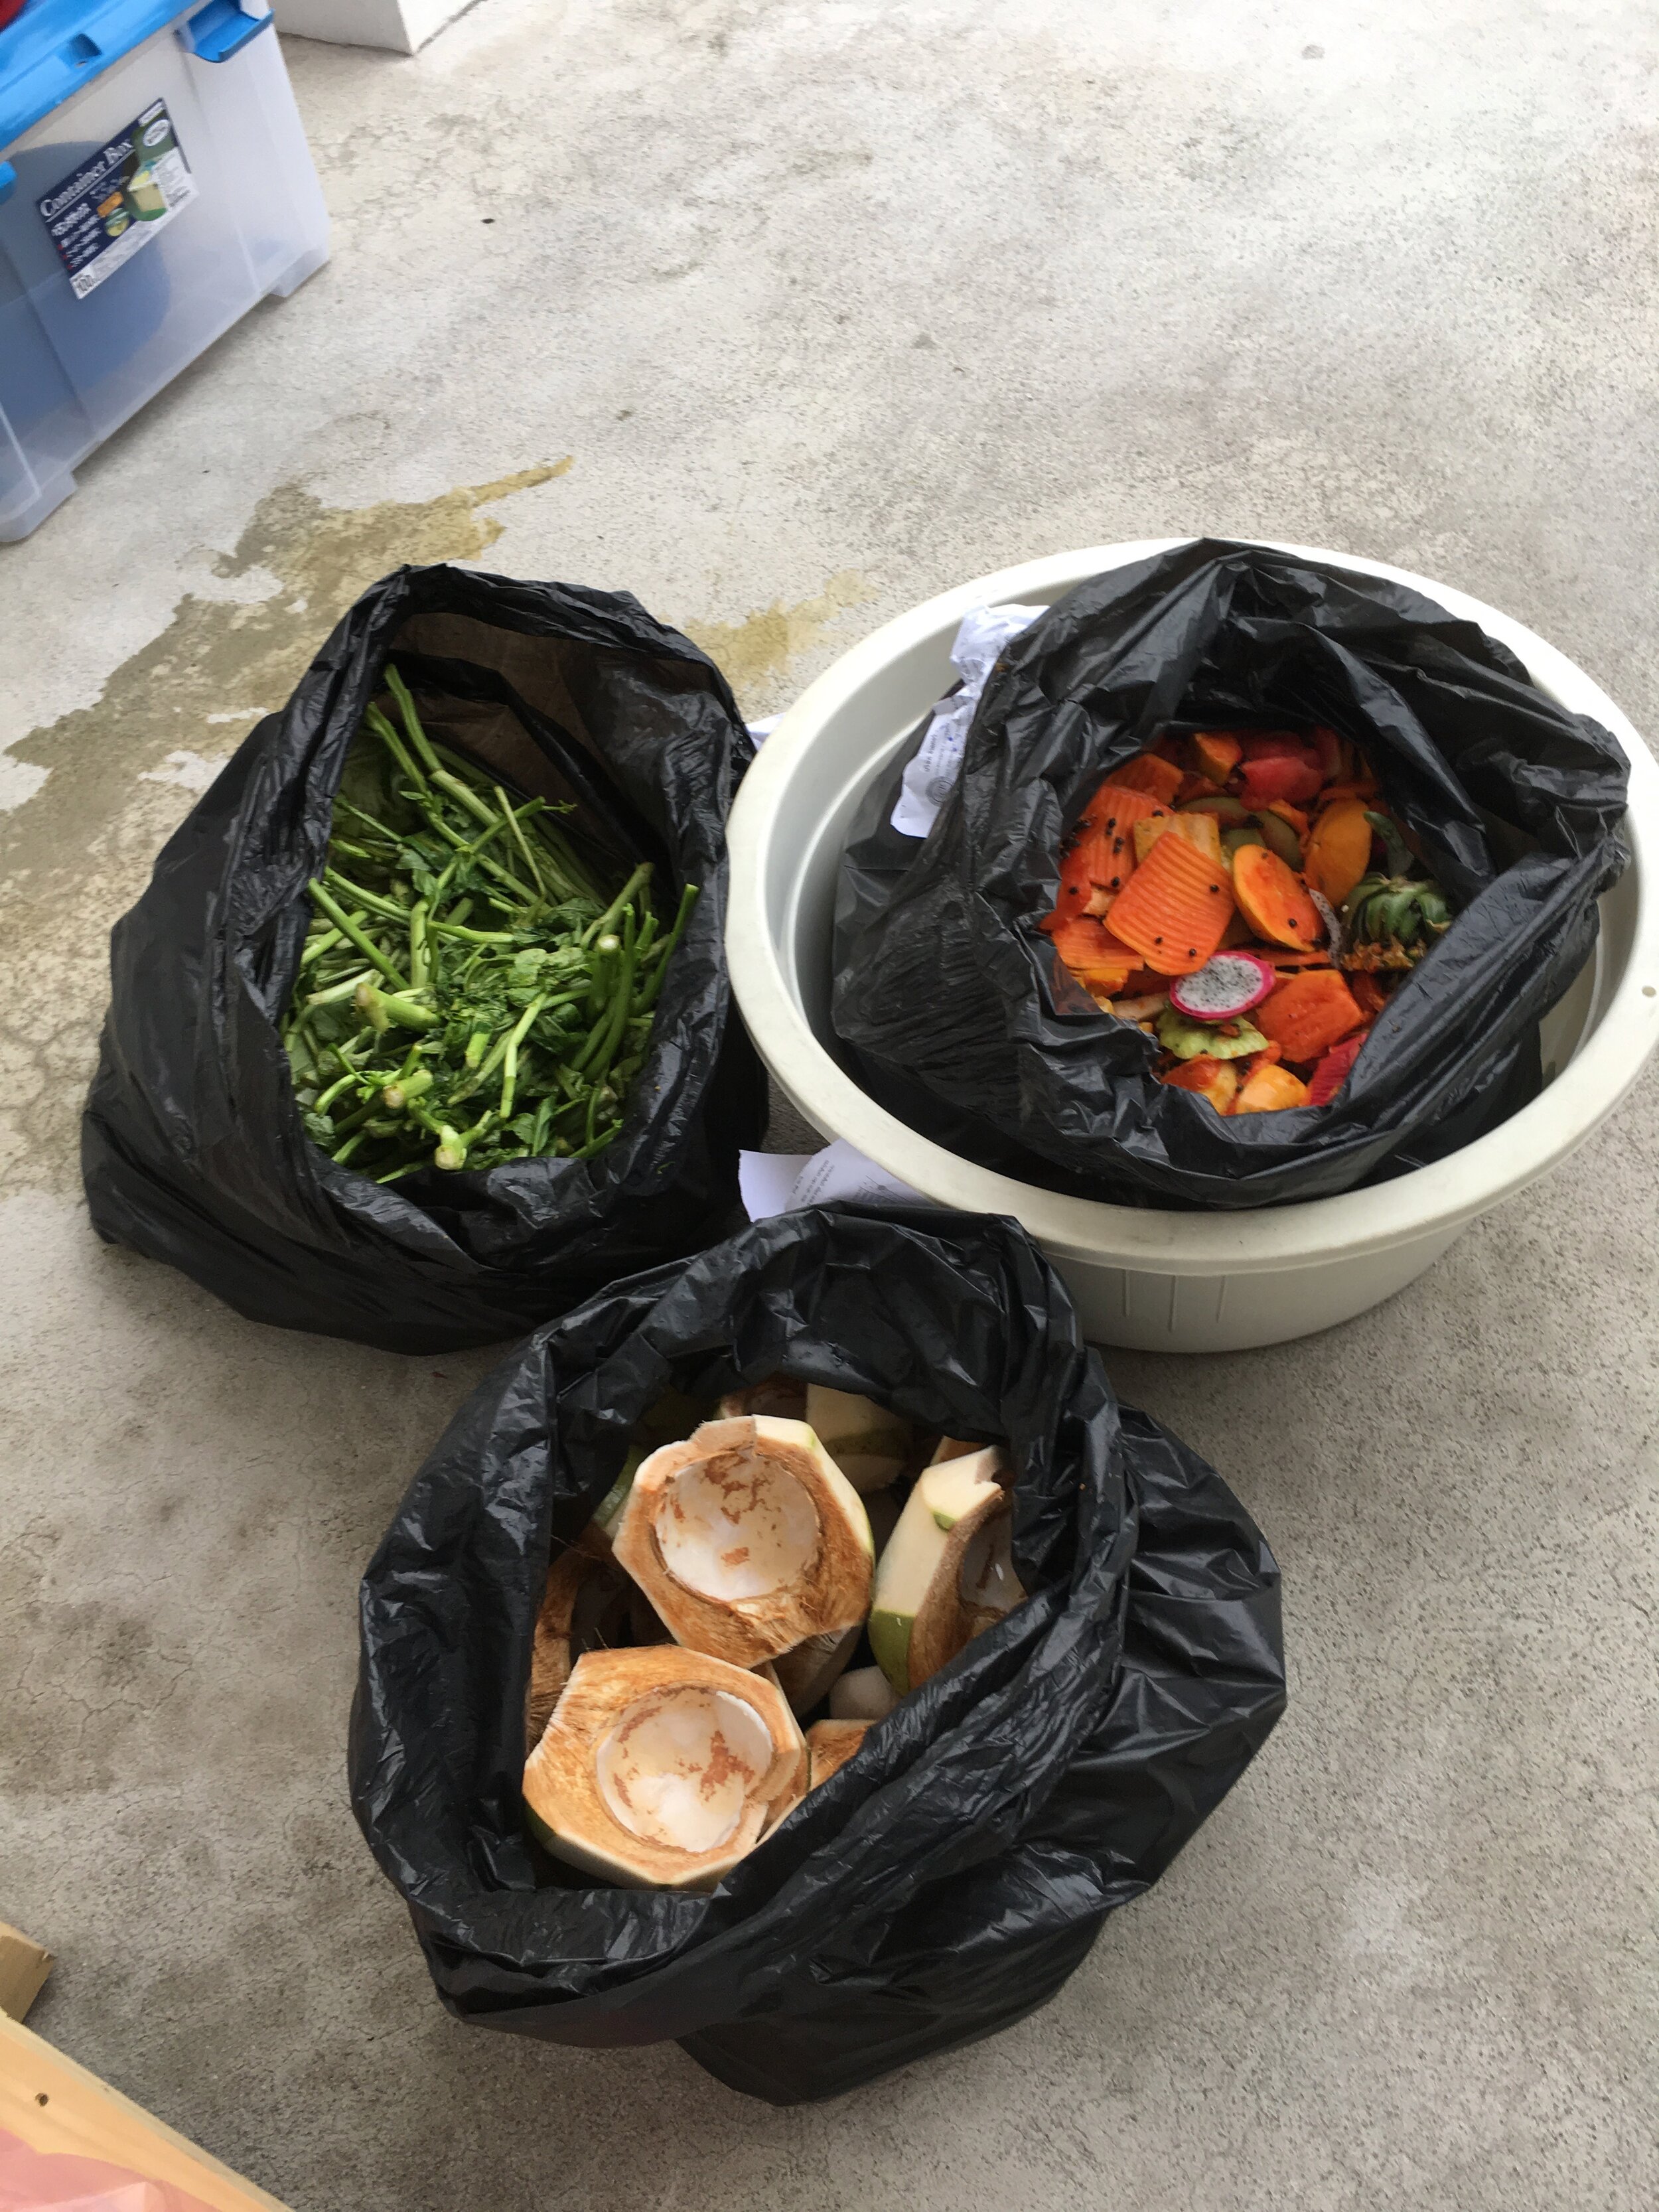 Pursonic FPR613 3 Litre Food Waste Processor & Composter